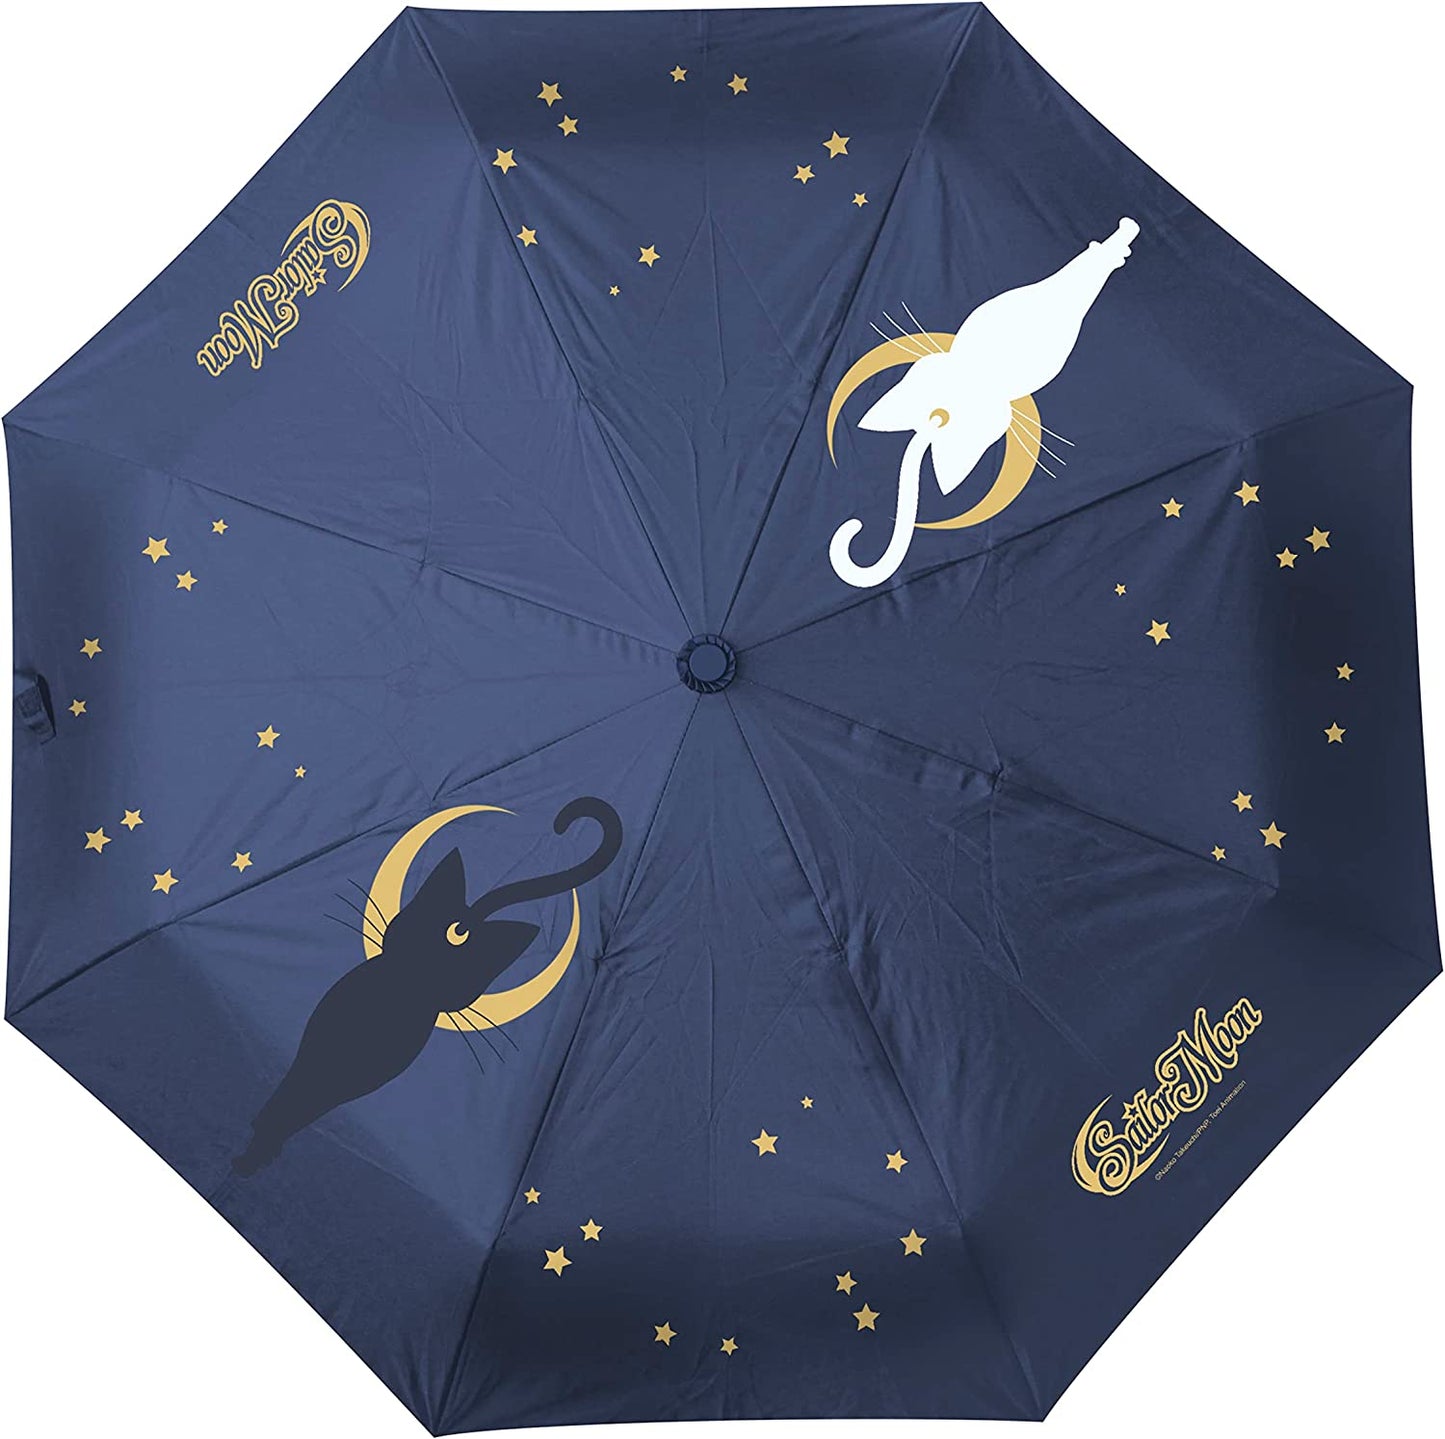 Luna & Artemis (Sailor Moon) Umbrella